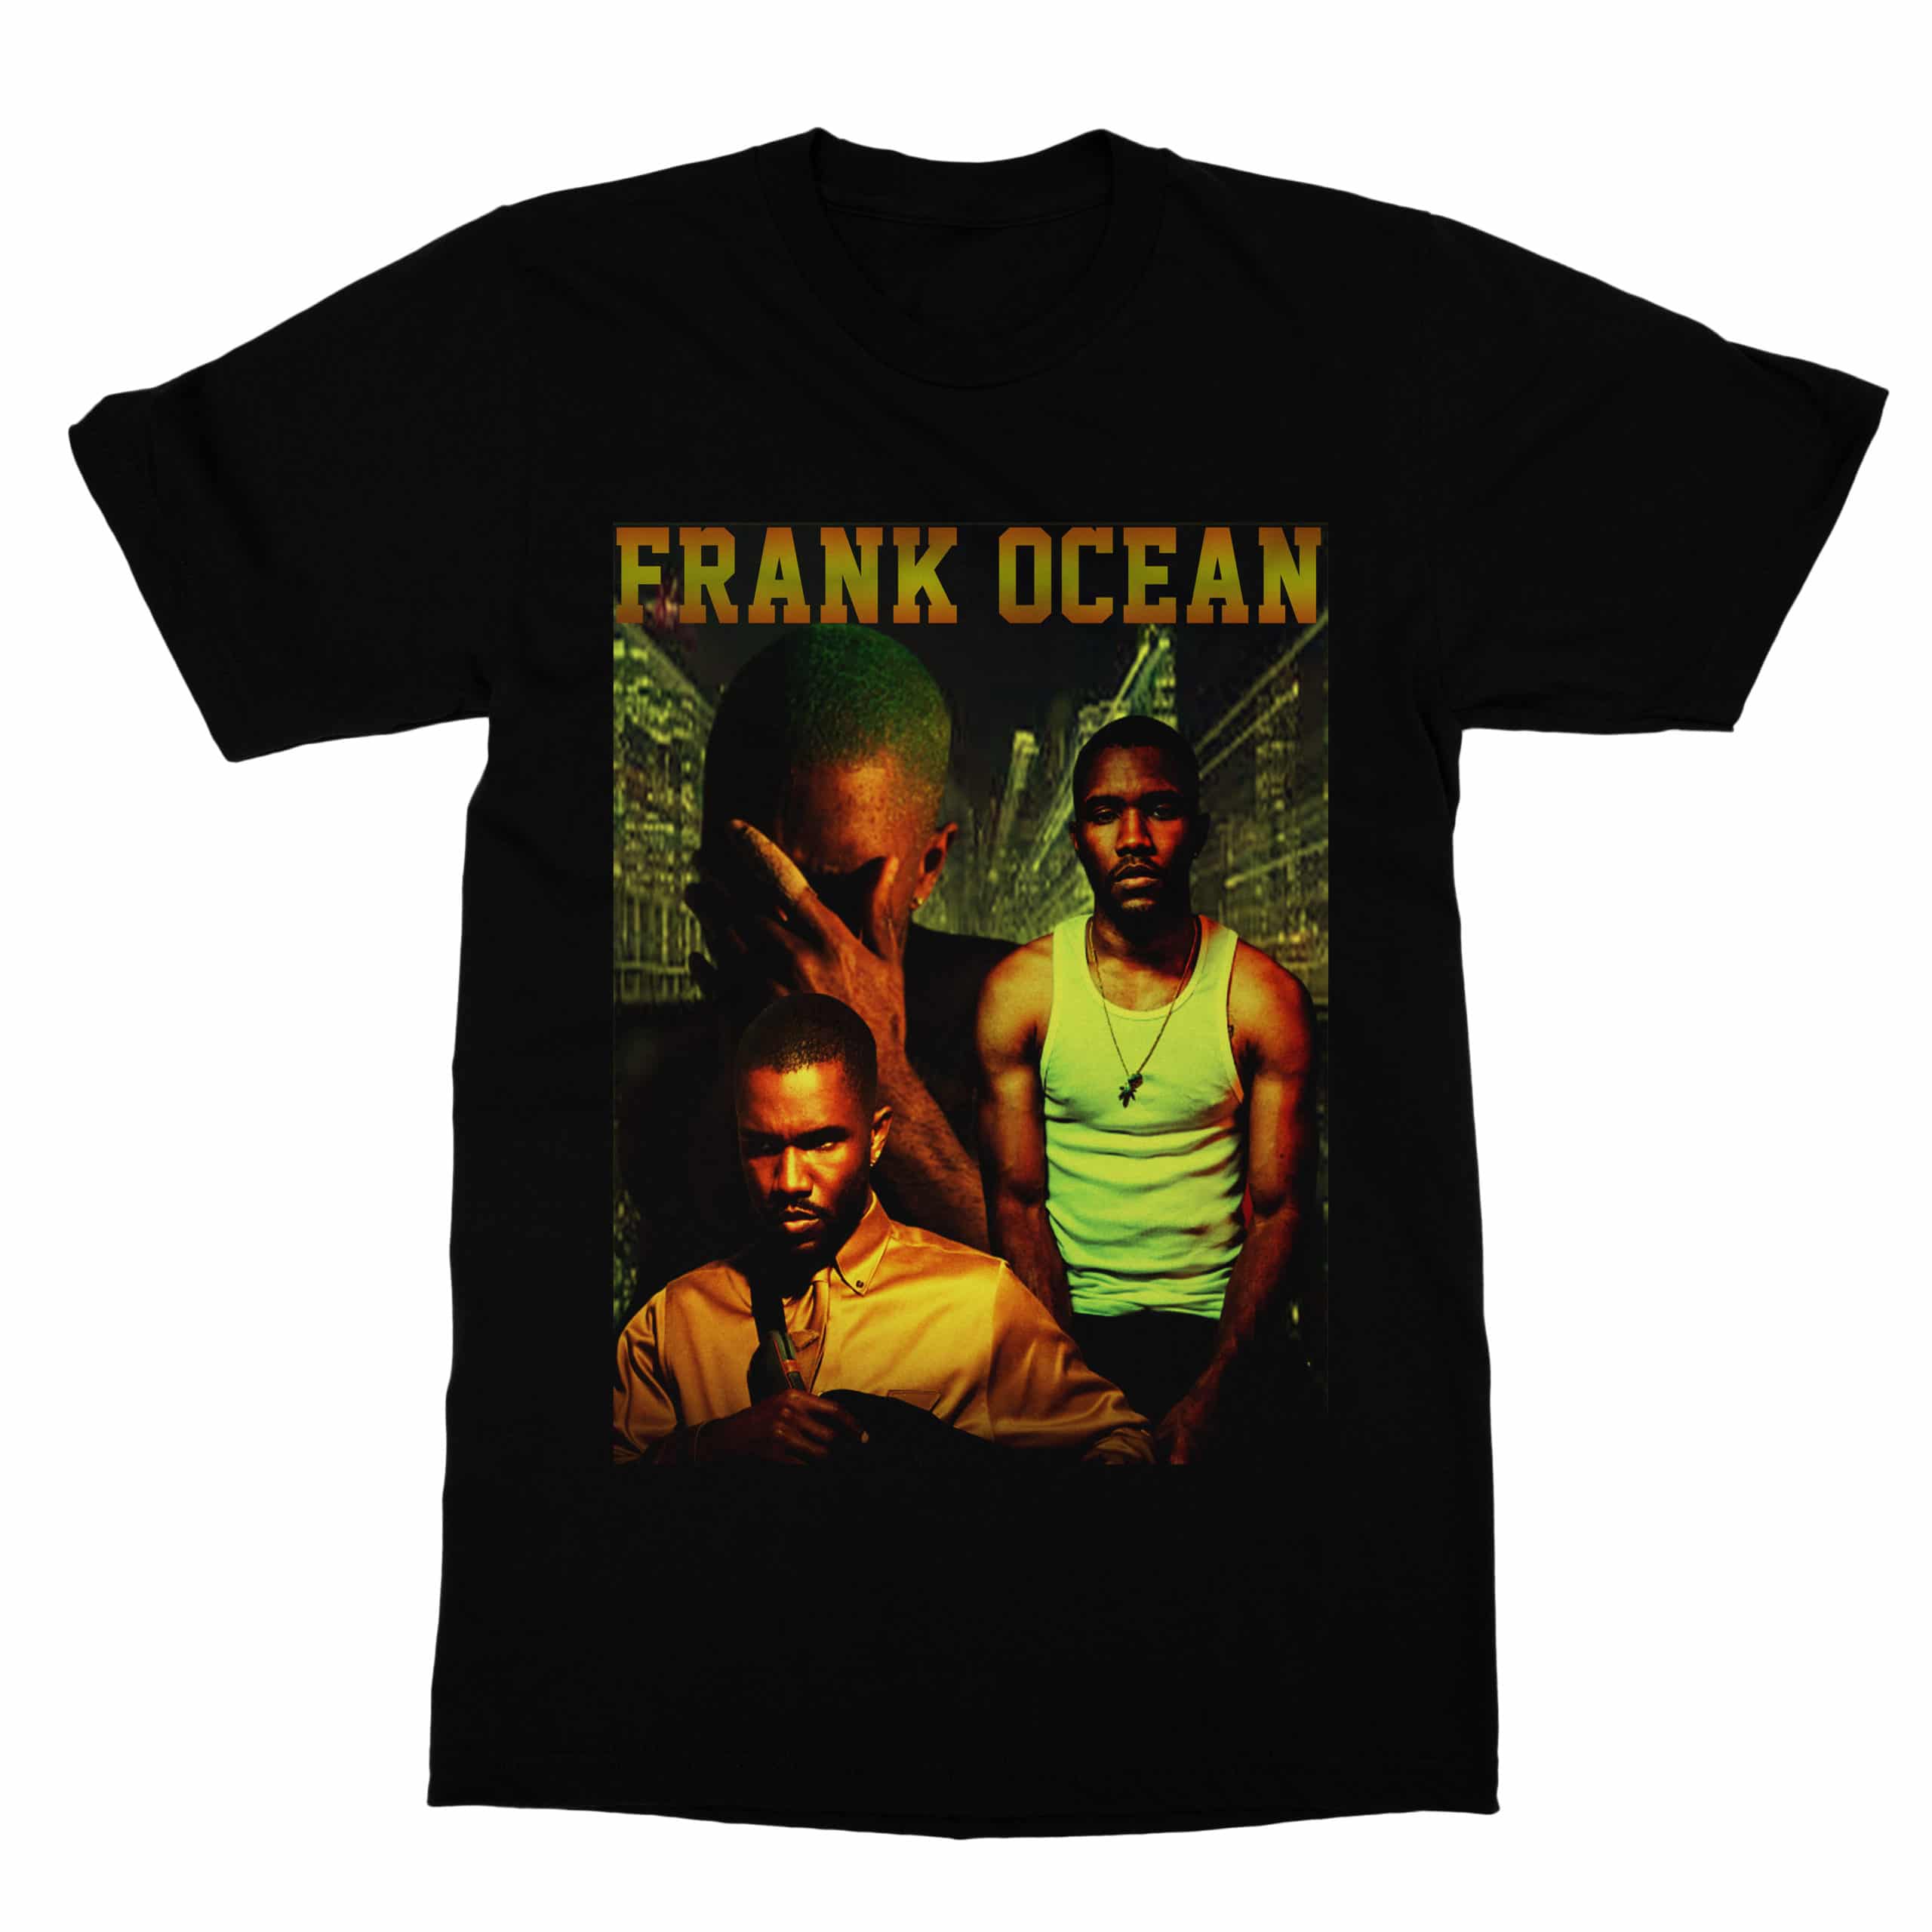 Vintage Style Frank Ocean T-Shirt Black Large